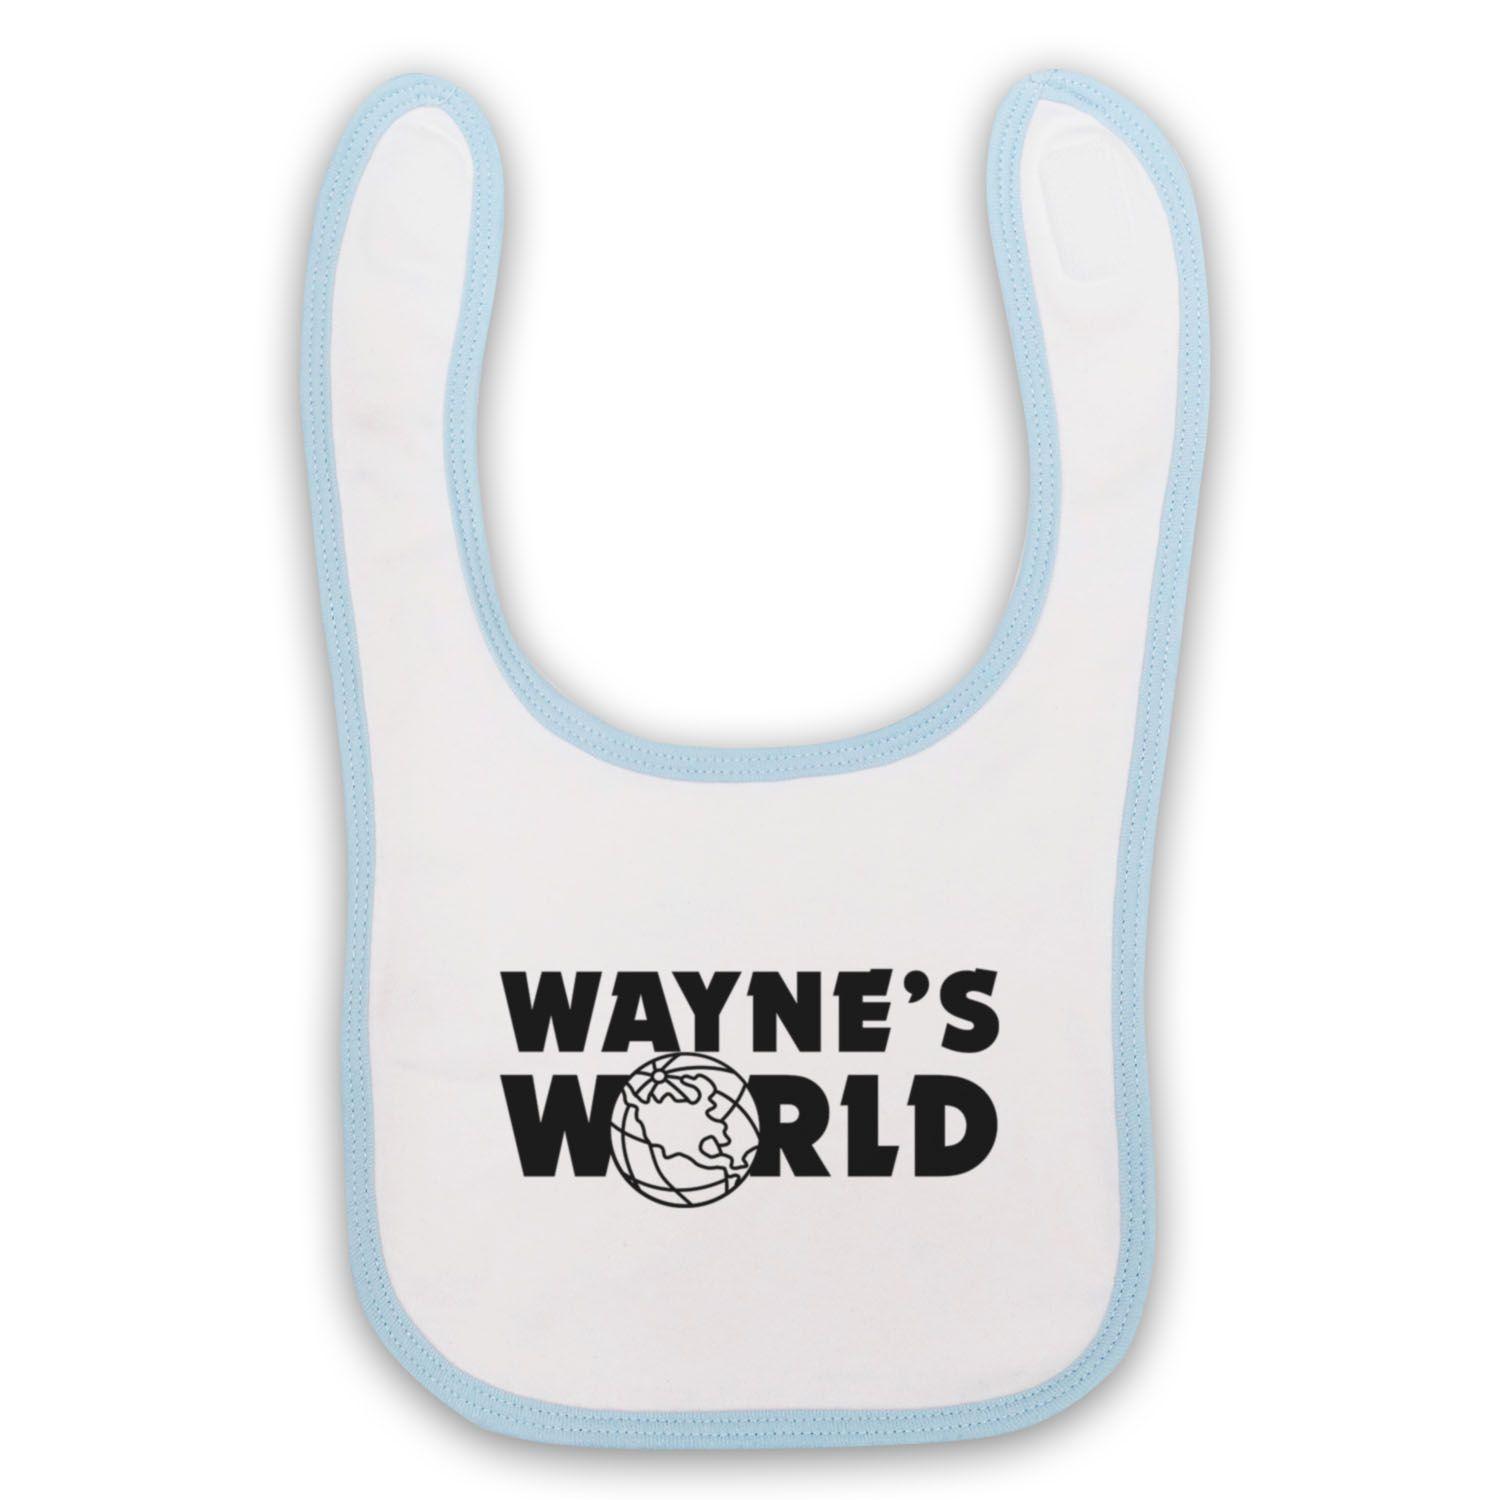 Baby in a World with Blue Logo - WAYNE'S WORLD LOGO UNOFFICIAL ROCK MUSIC FILM GARTH BABY BIB CUTE ...